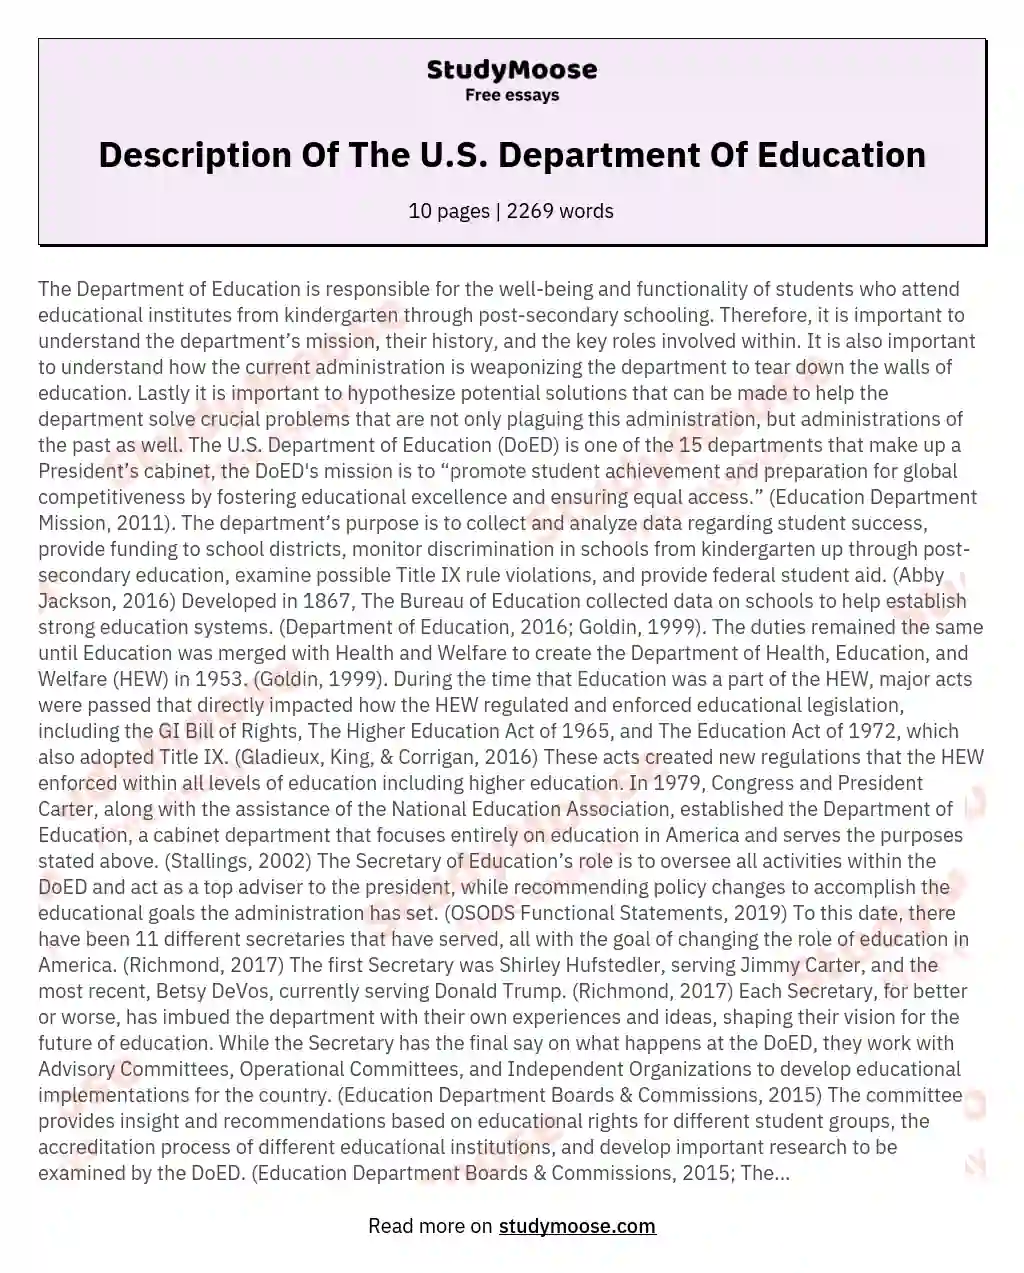 Description Of The U.S. Department Of Education essay